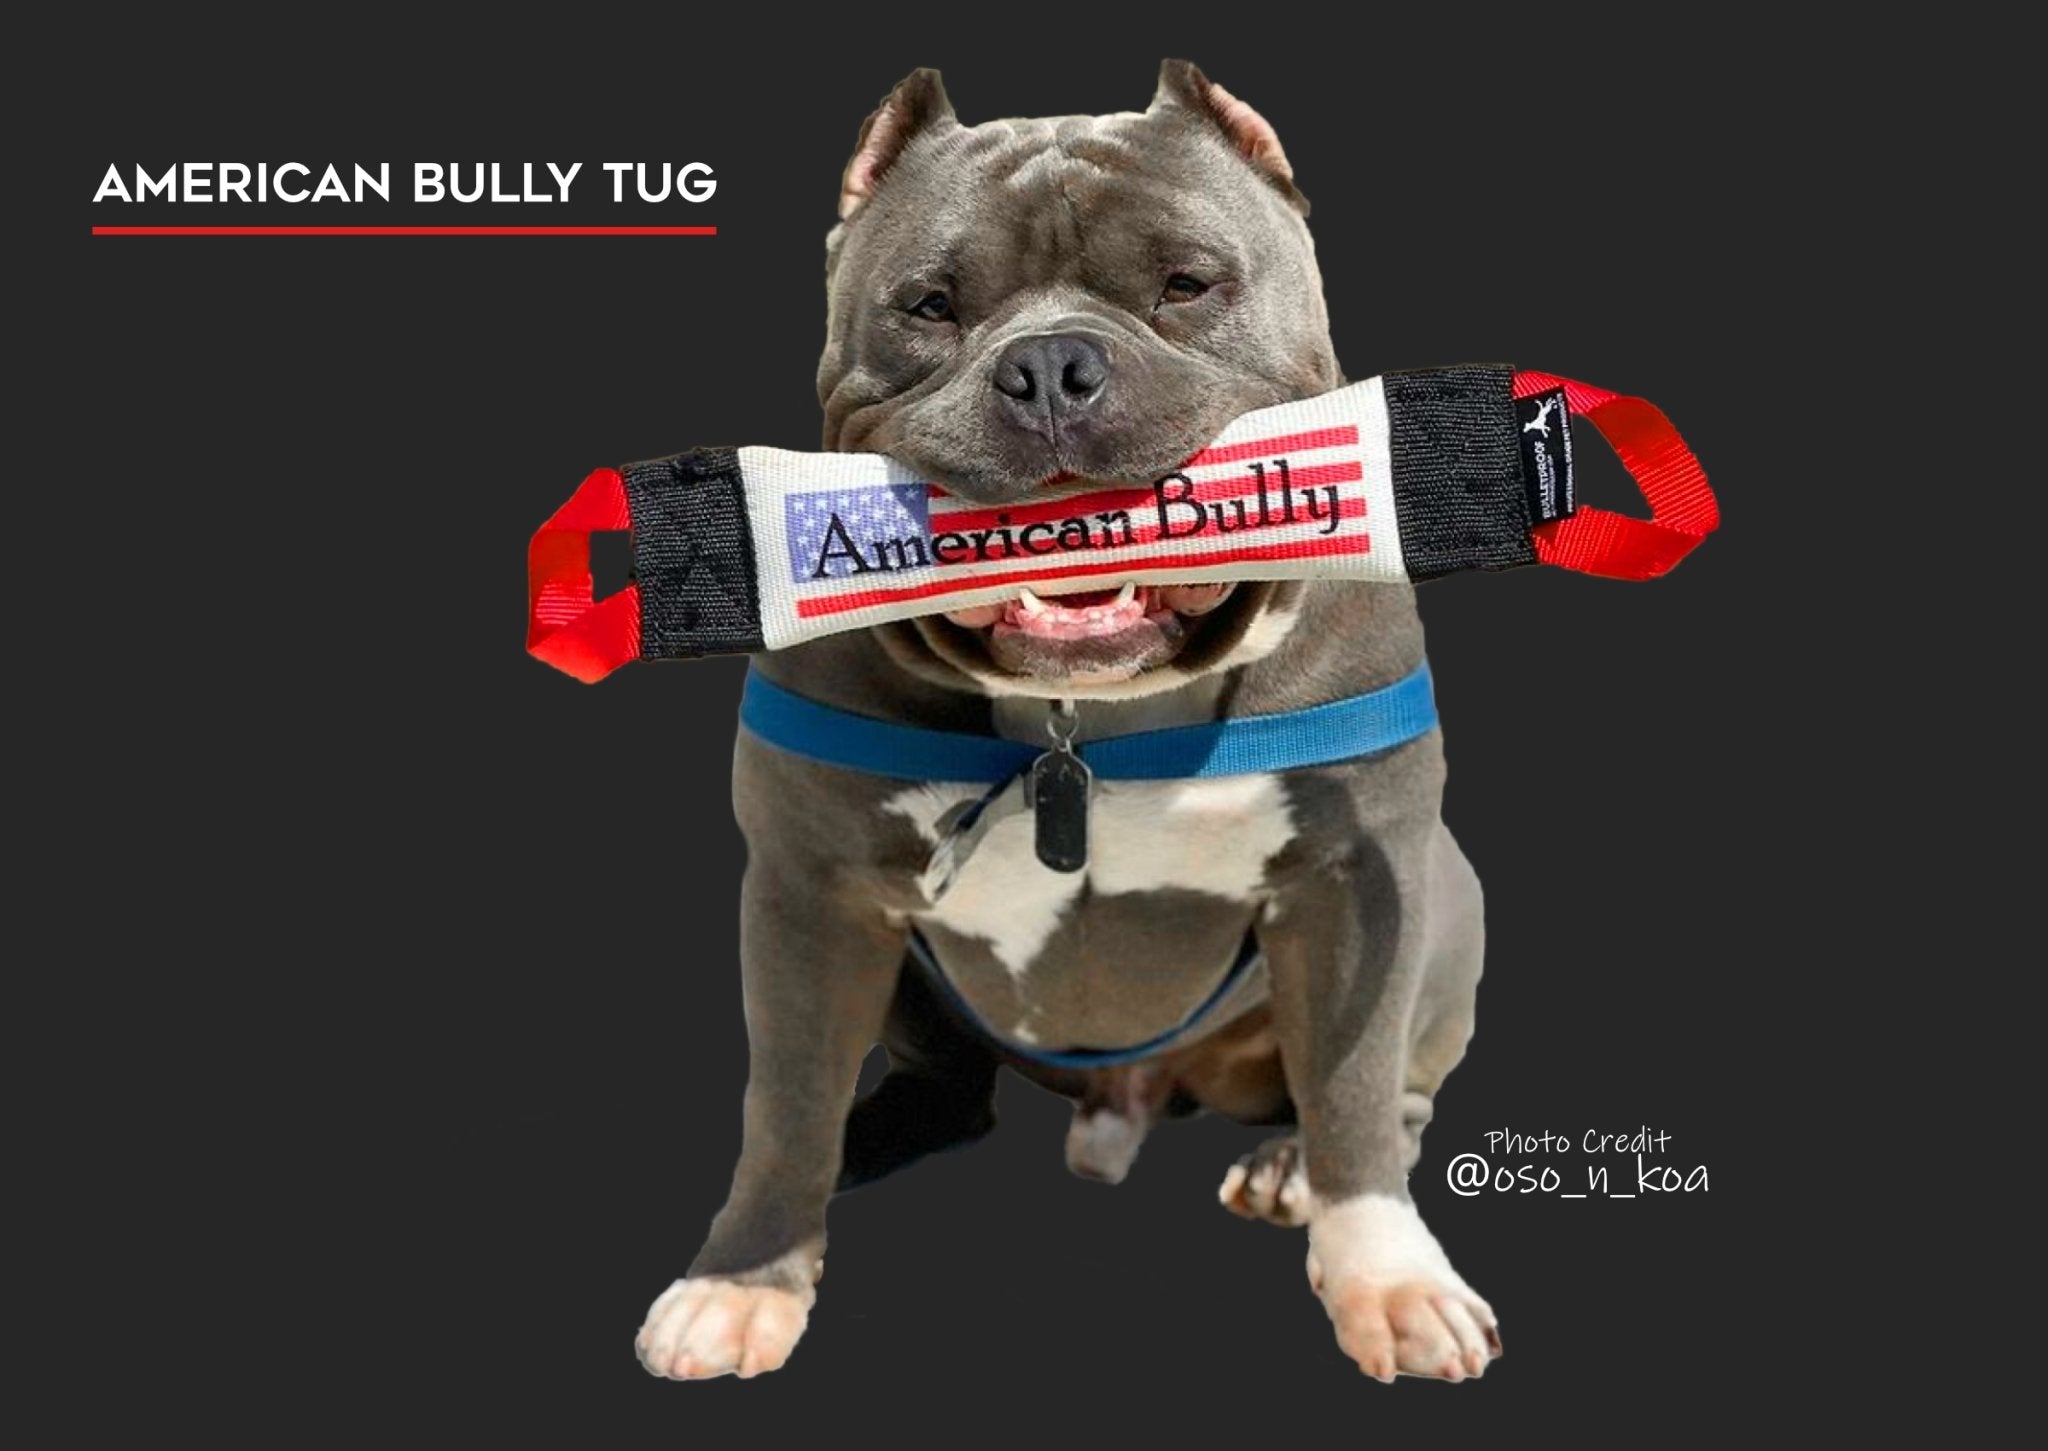 American Bully Fire Hose Training Tug